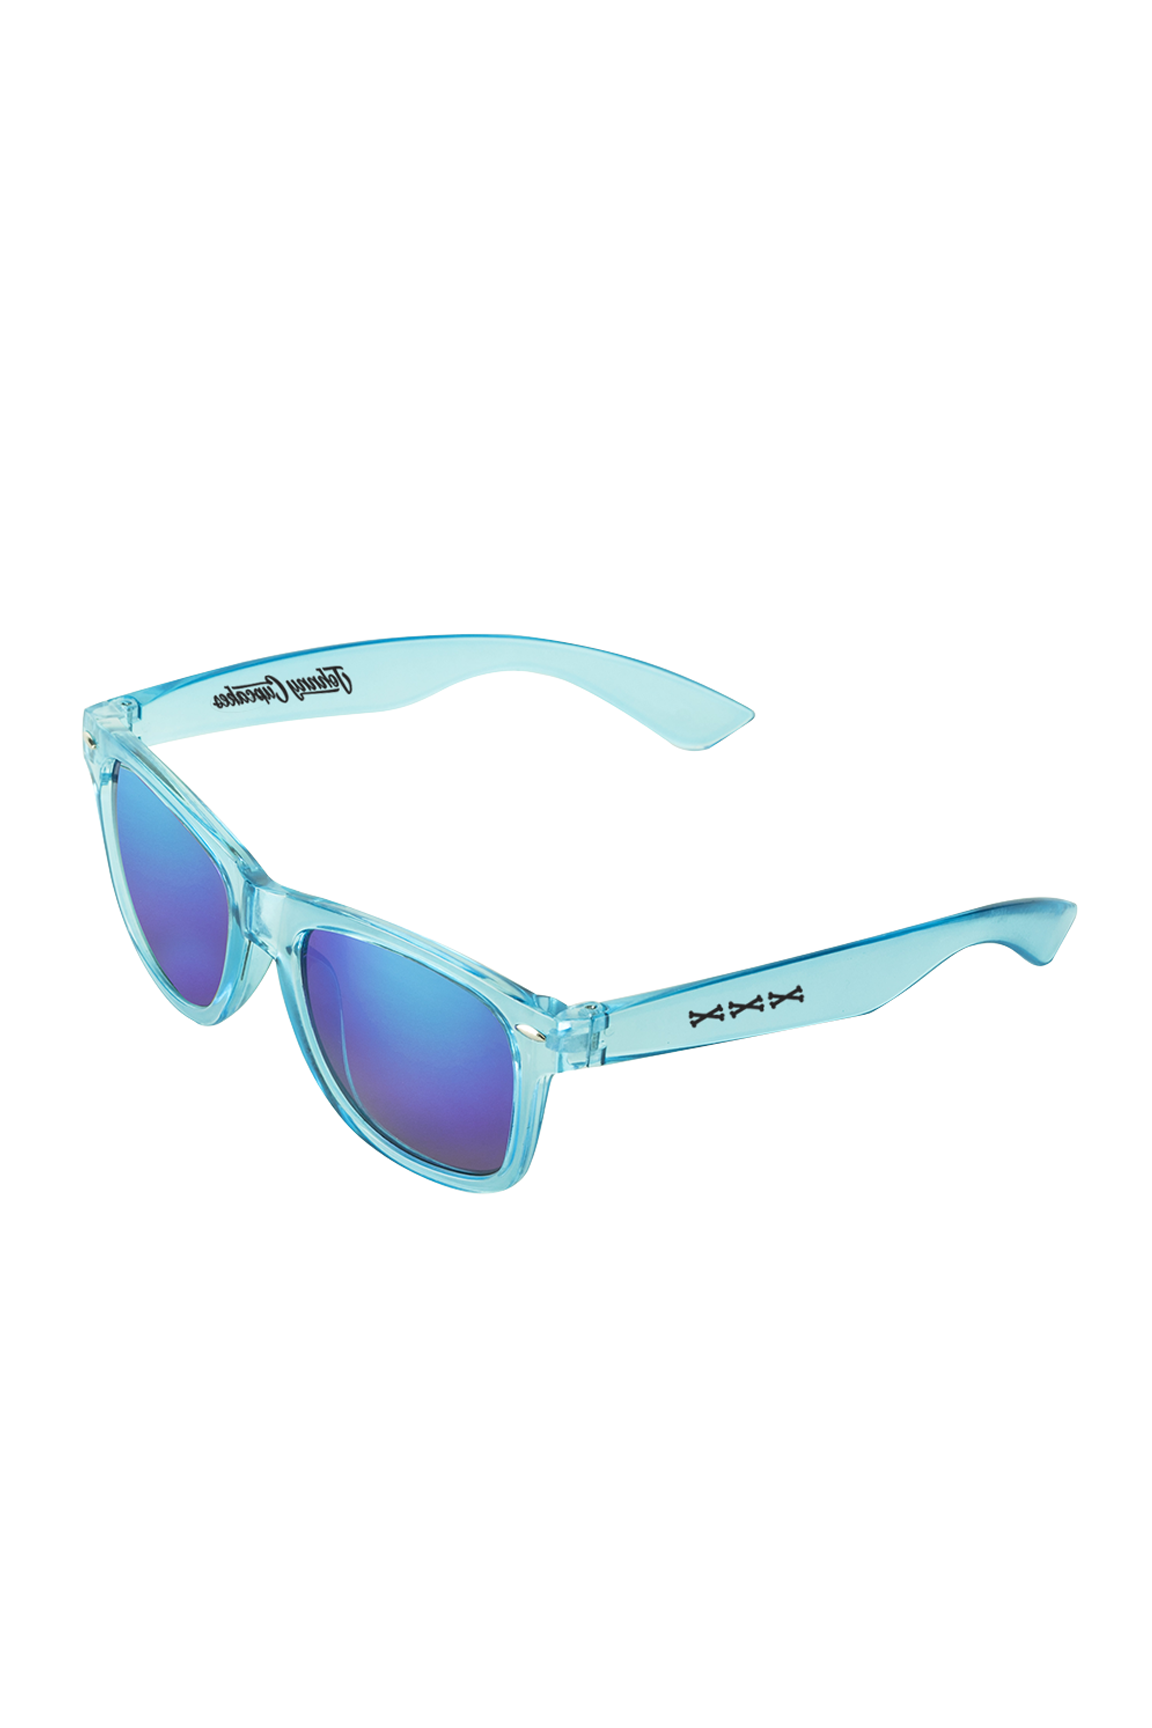 JC Script Mirrored Sunglasses - Blue